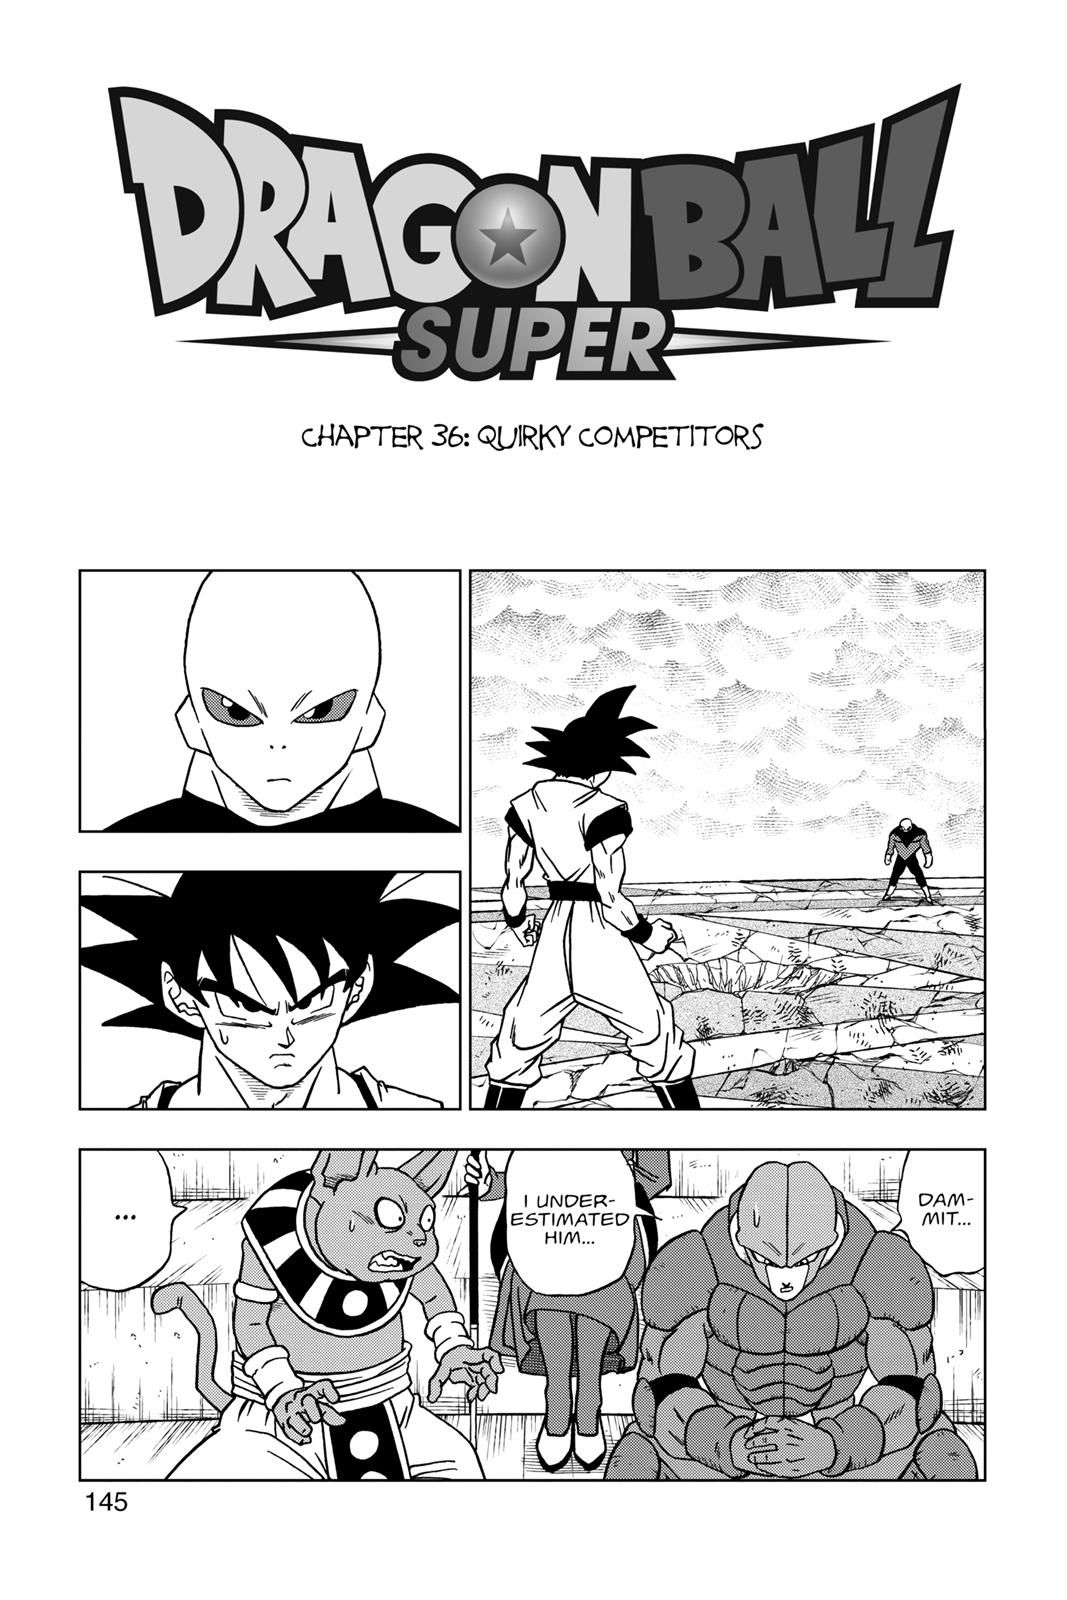 My Favorite Moment In Dragon Ball Super Manga(CCC), Wiki